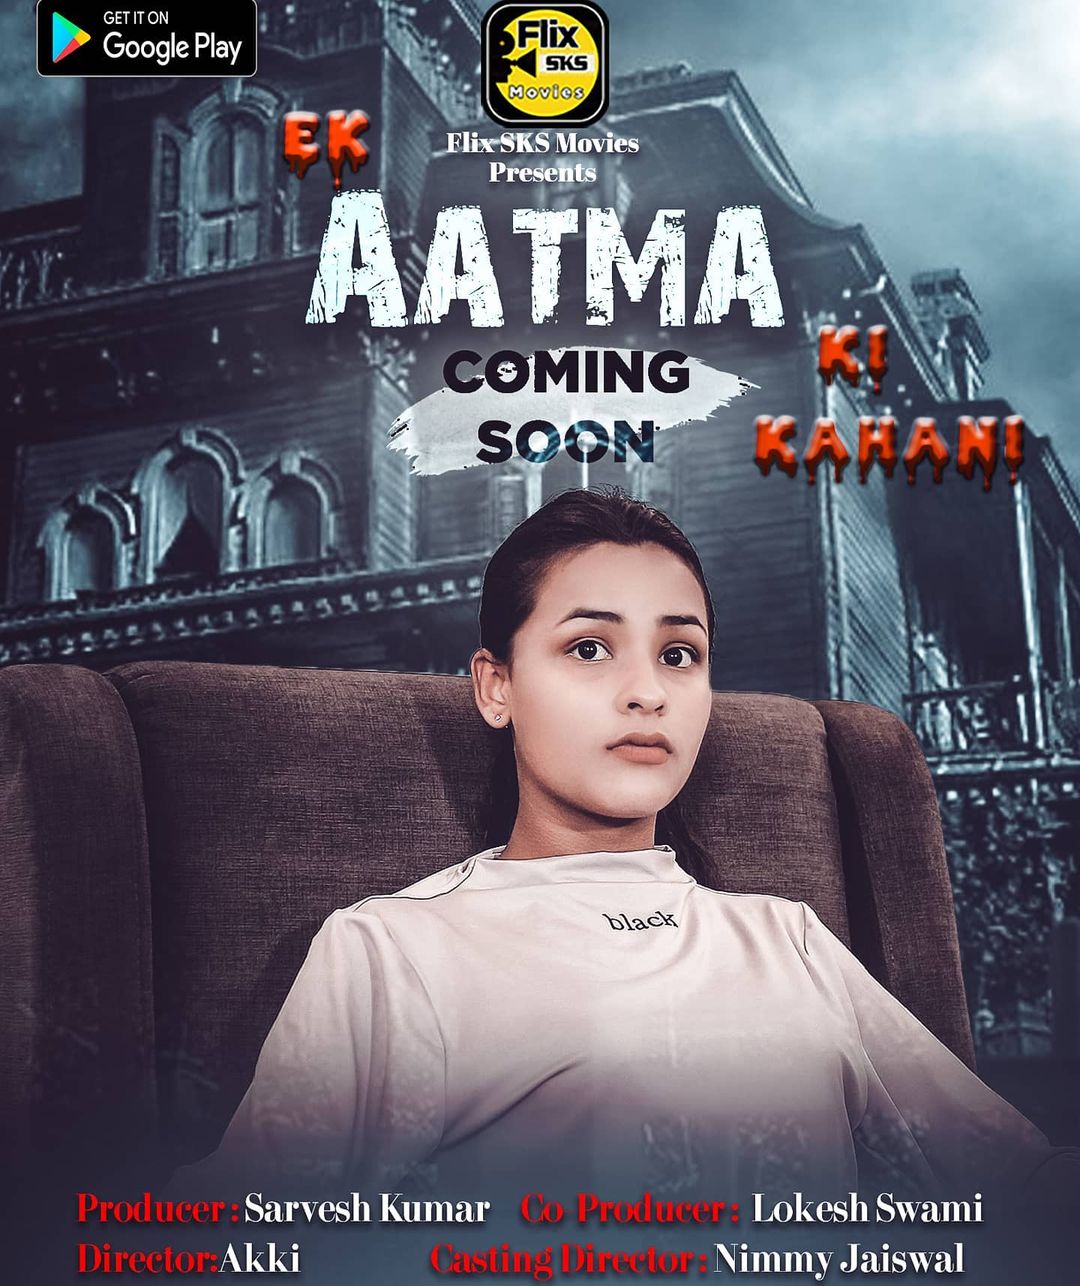 Ek Aatma Ki Kahani (2020) Season 1 Episode 1 FlixSKSMovies (2020)